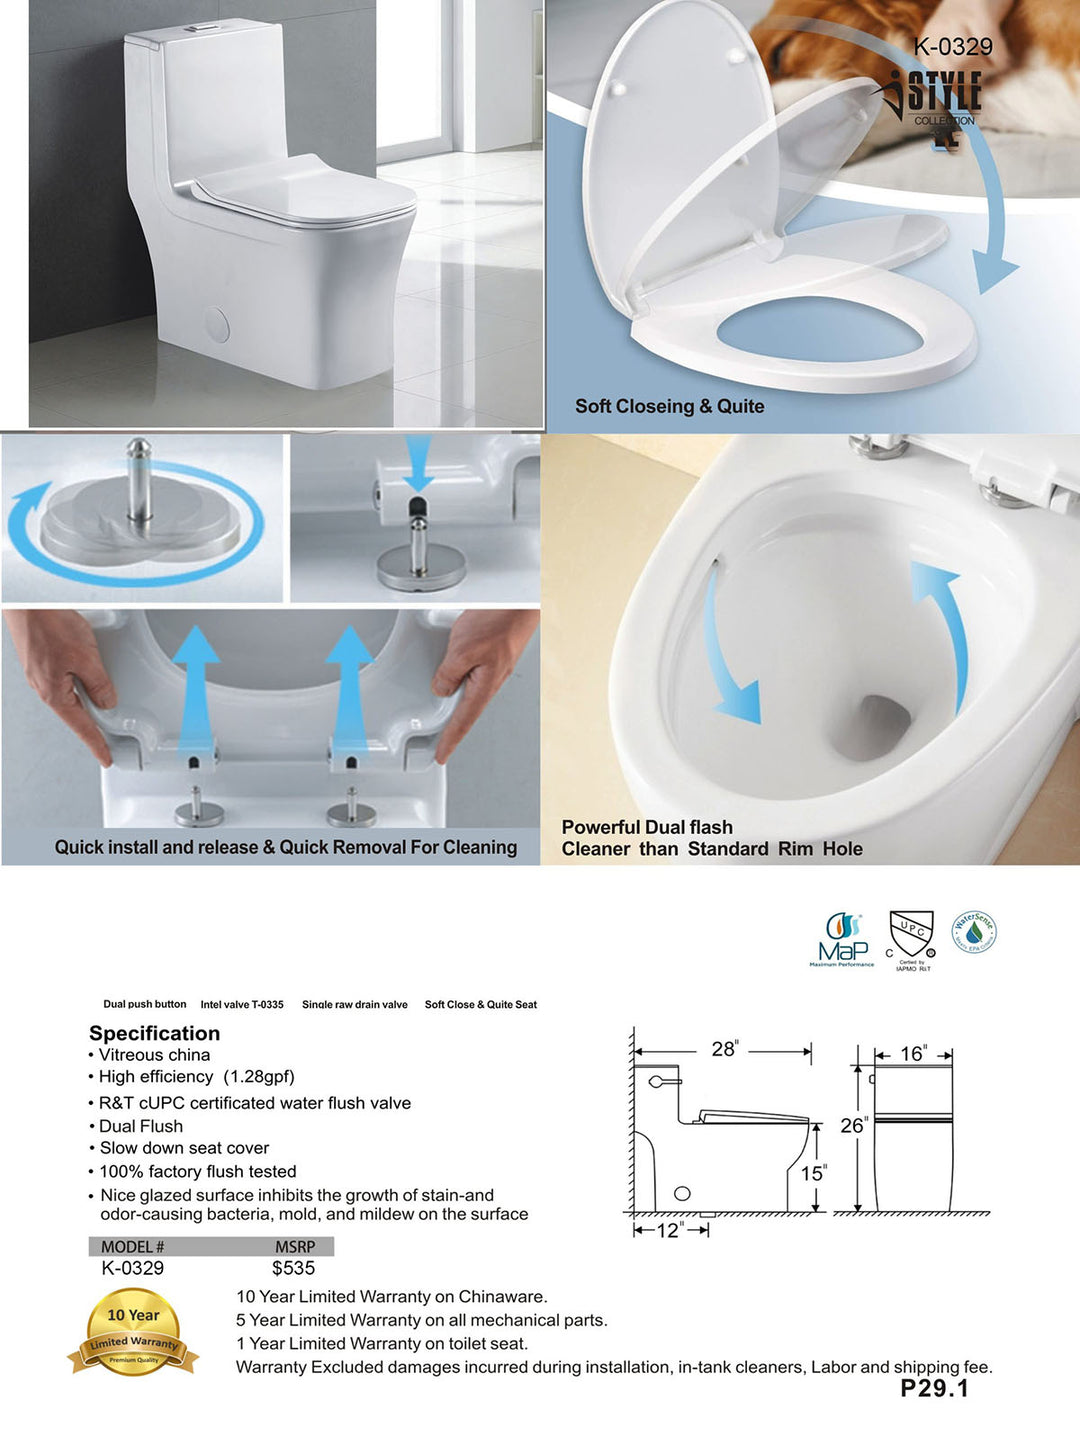 iStyle Toilet K-0329